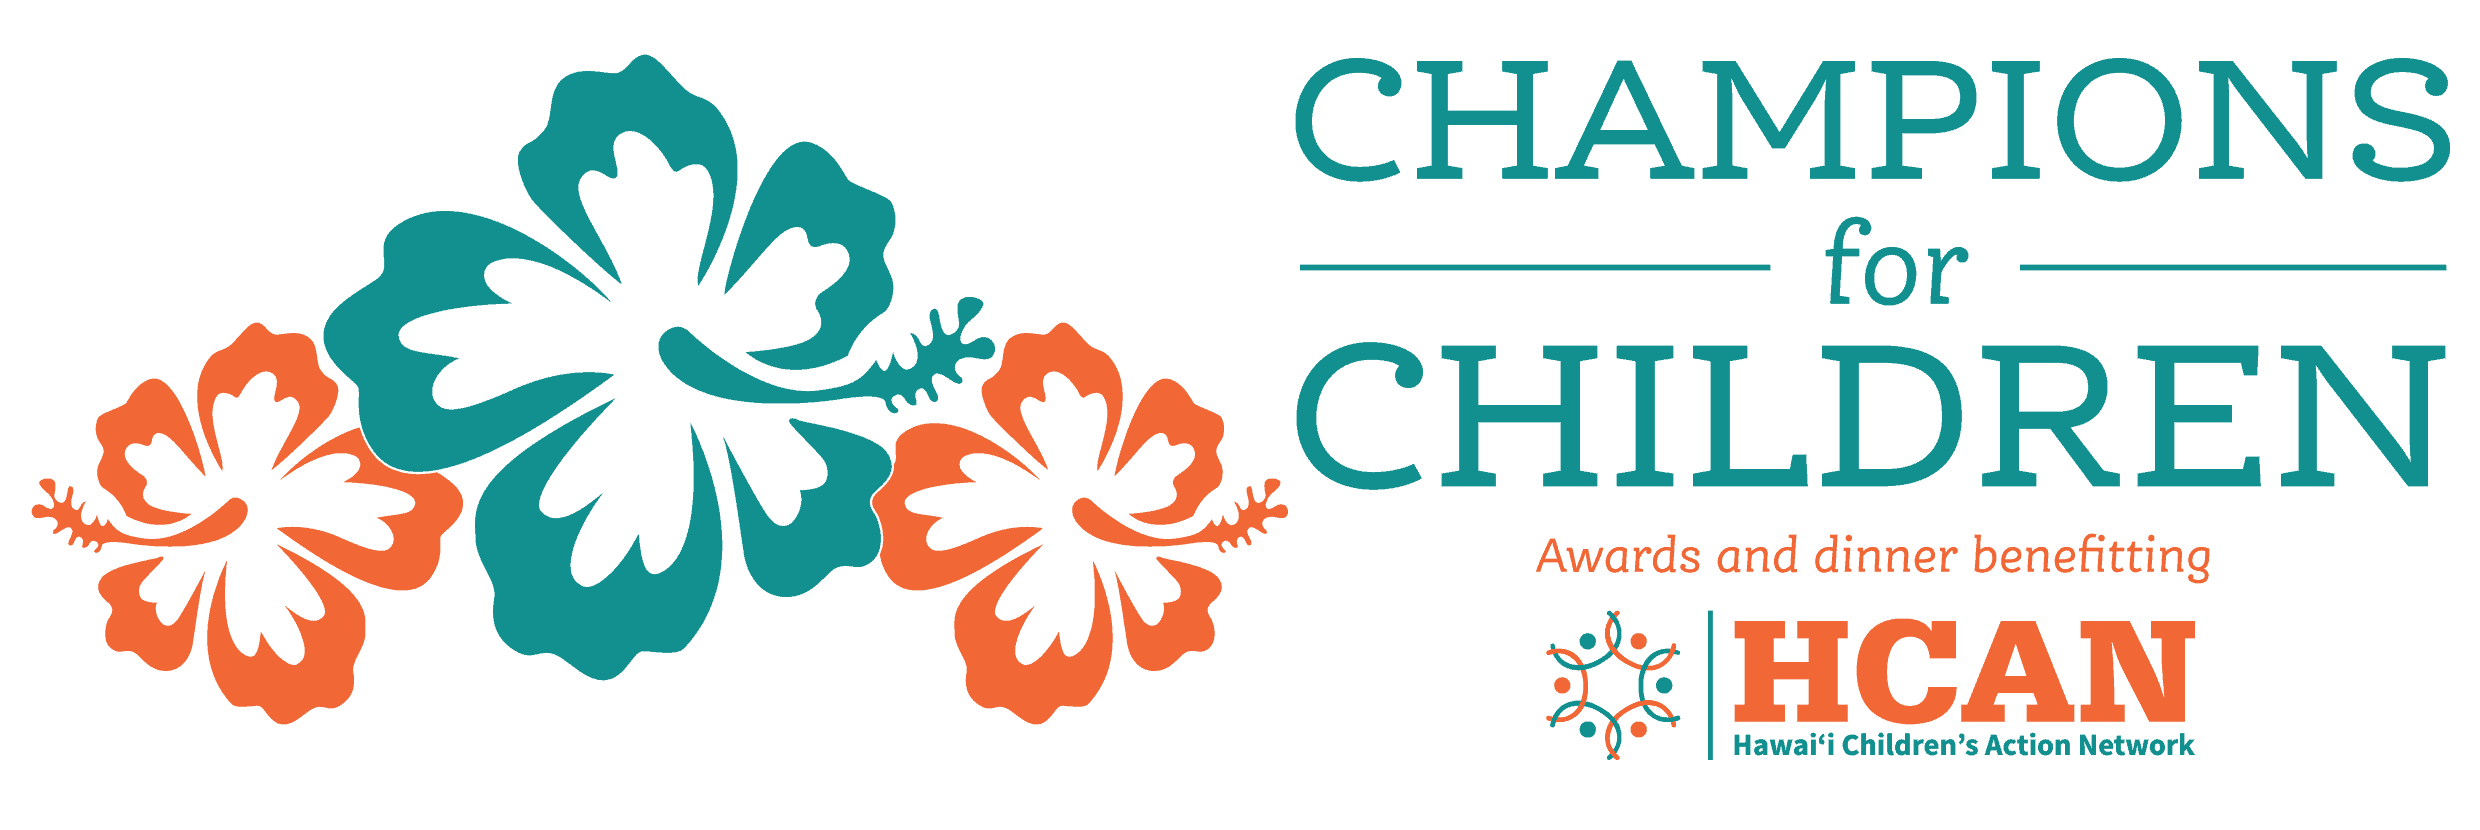 Hawaii Children's Action Network: Champions for Children